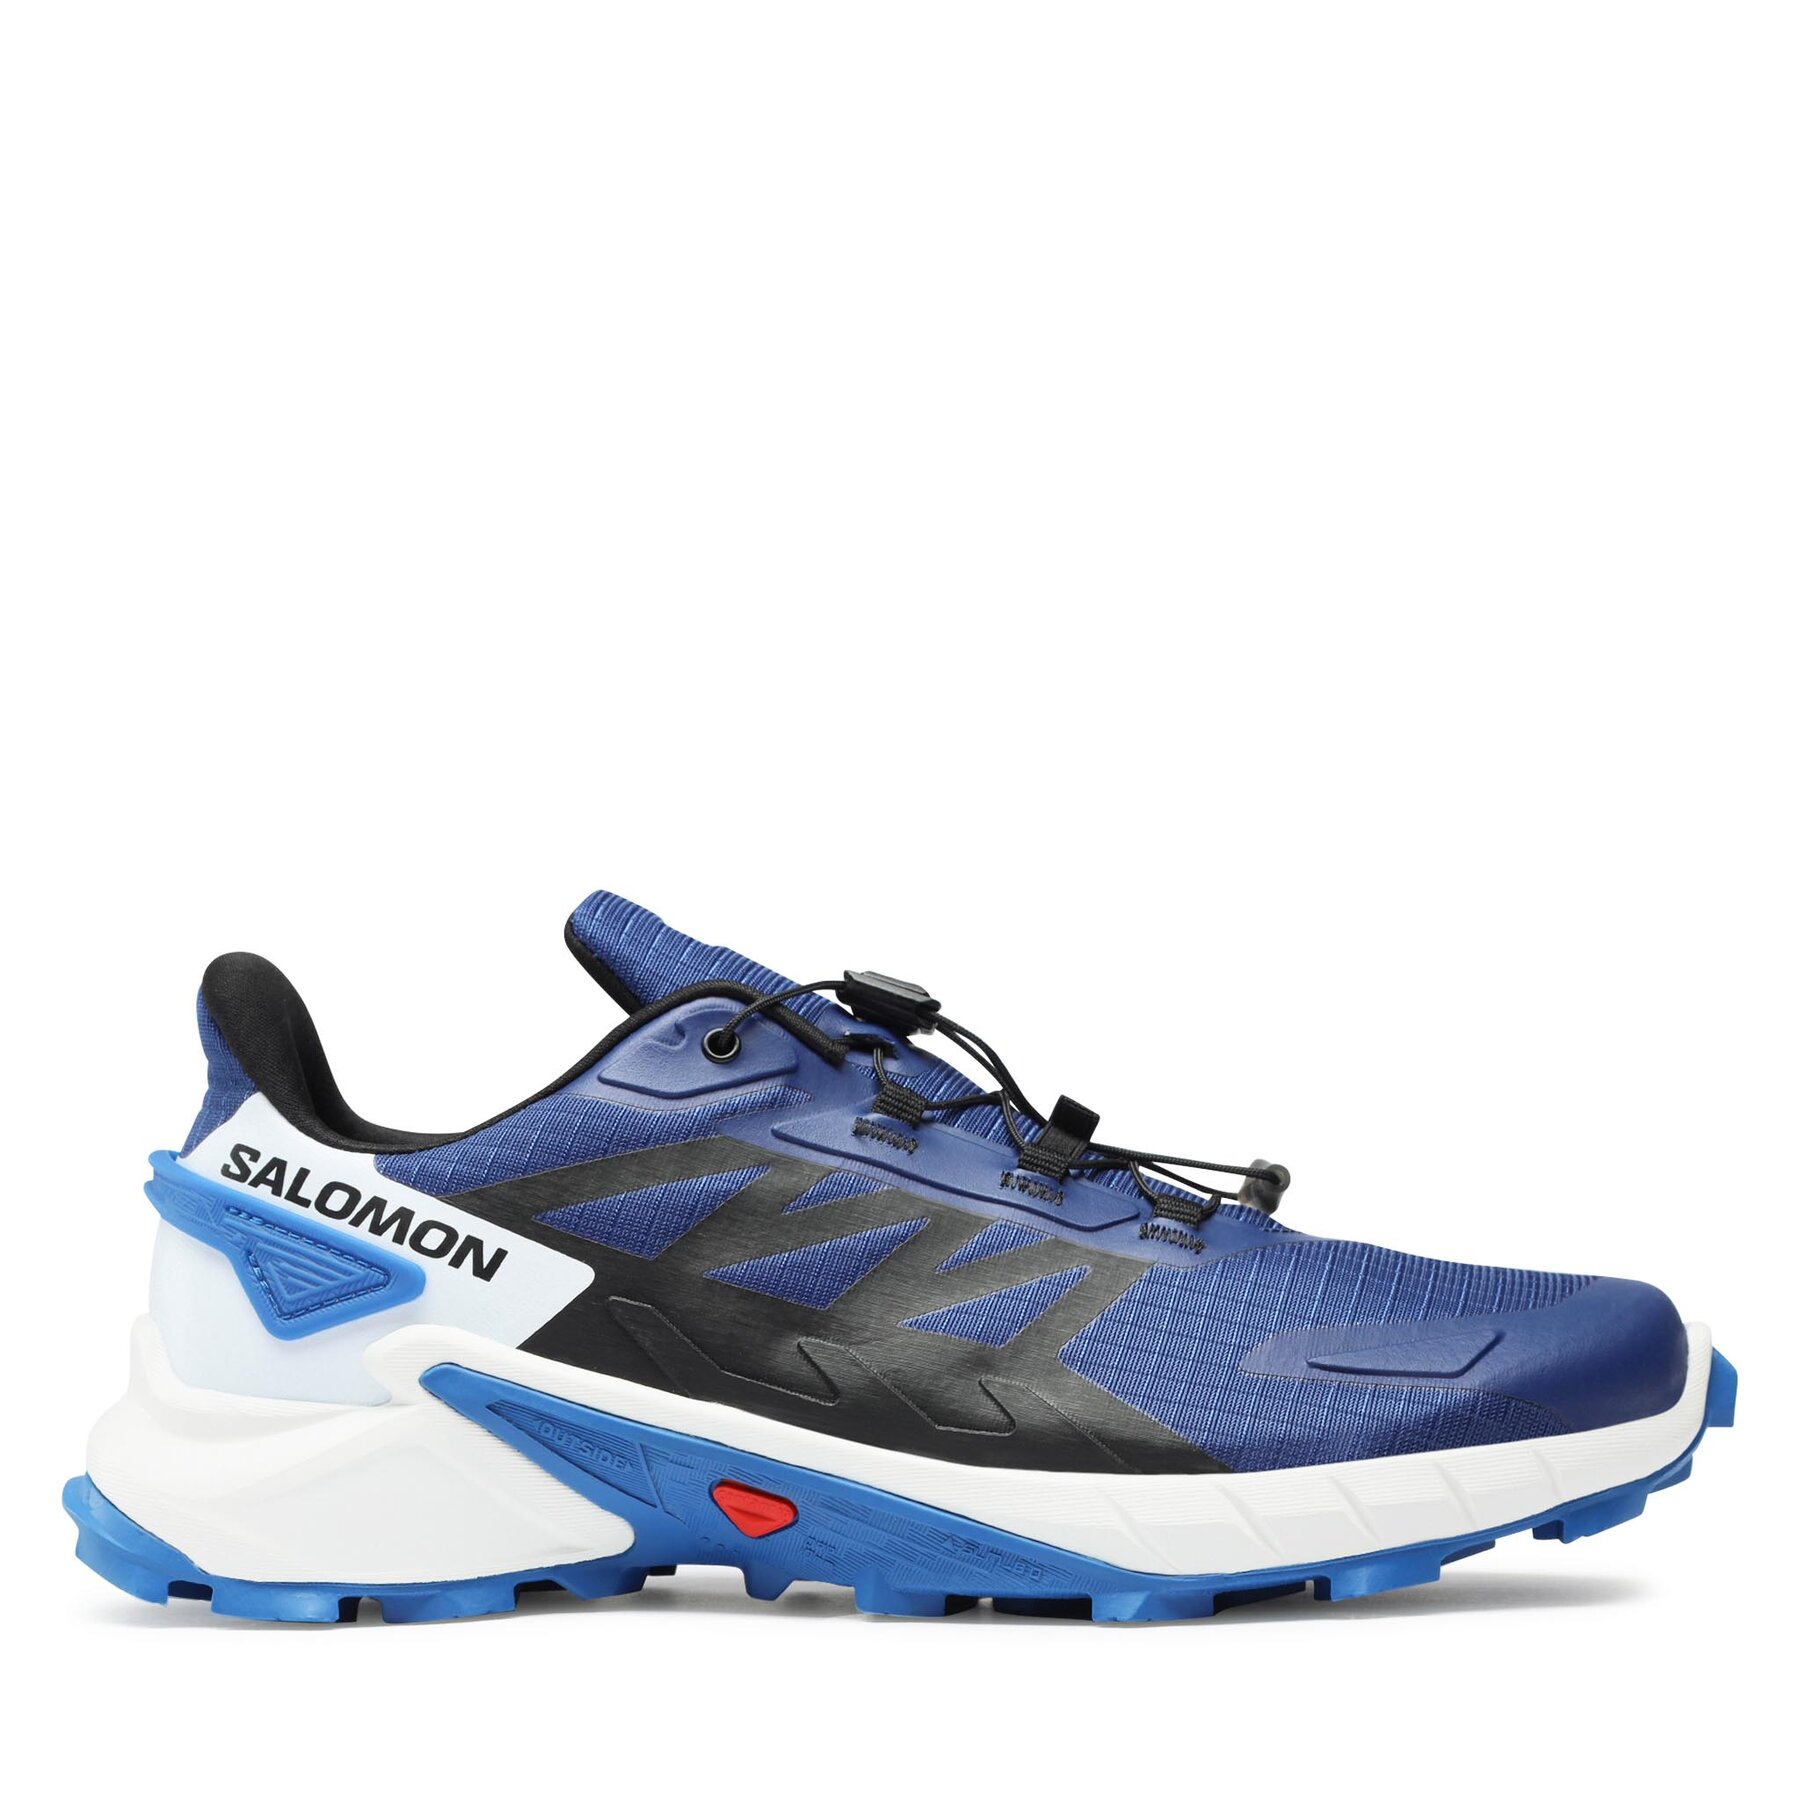 Schuhe Salomon Supercross 4 L47315700 Blue Print/Black/Lapis Blue von Salomon